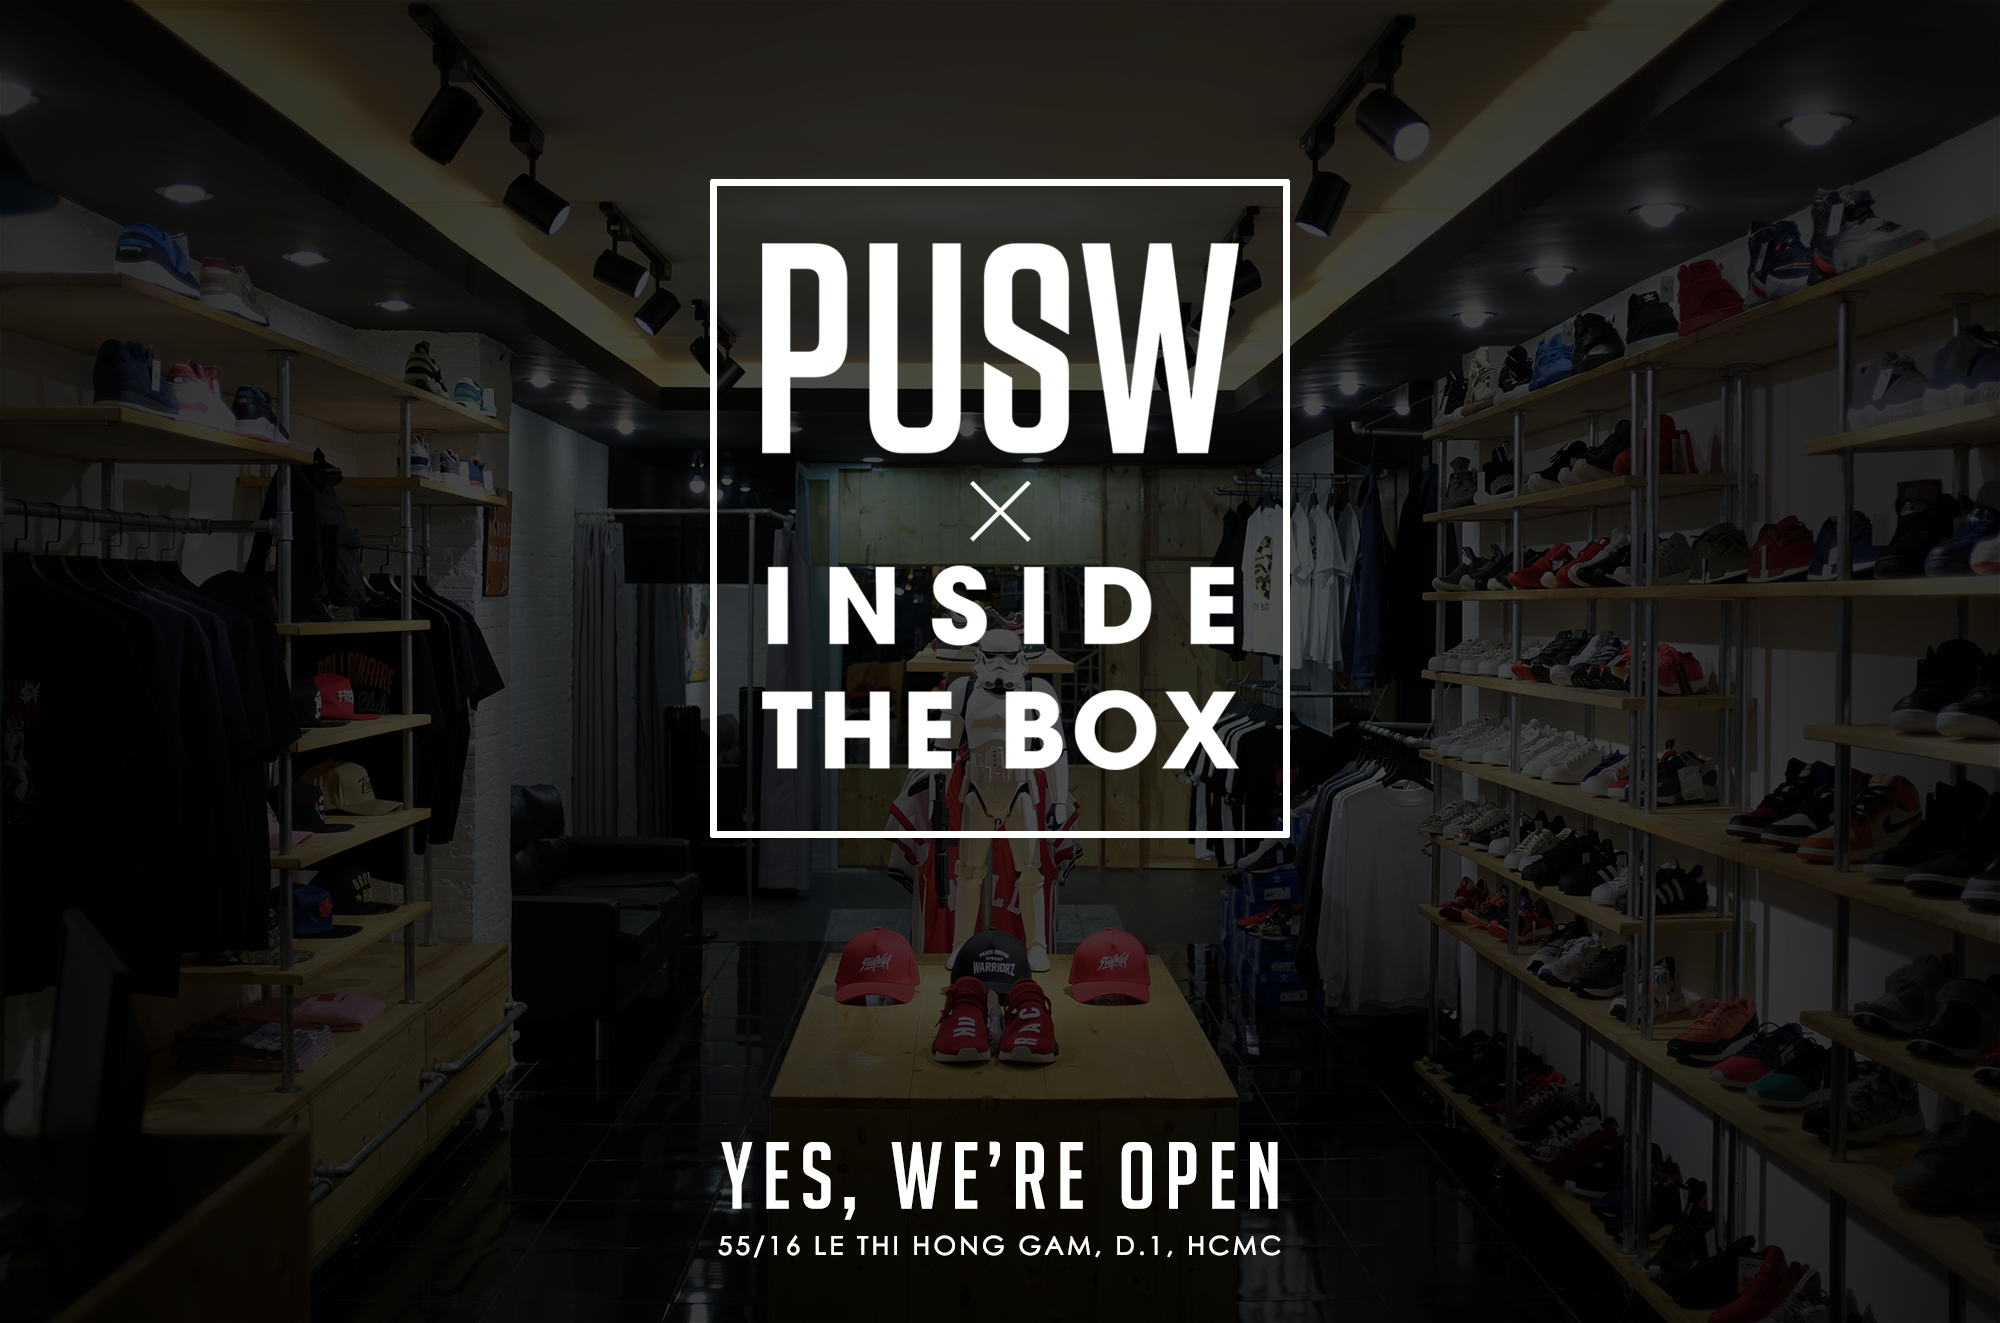 PUSW x Inside the Box - A new street fashion shop for Saigon youth